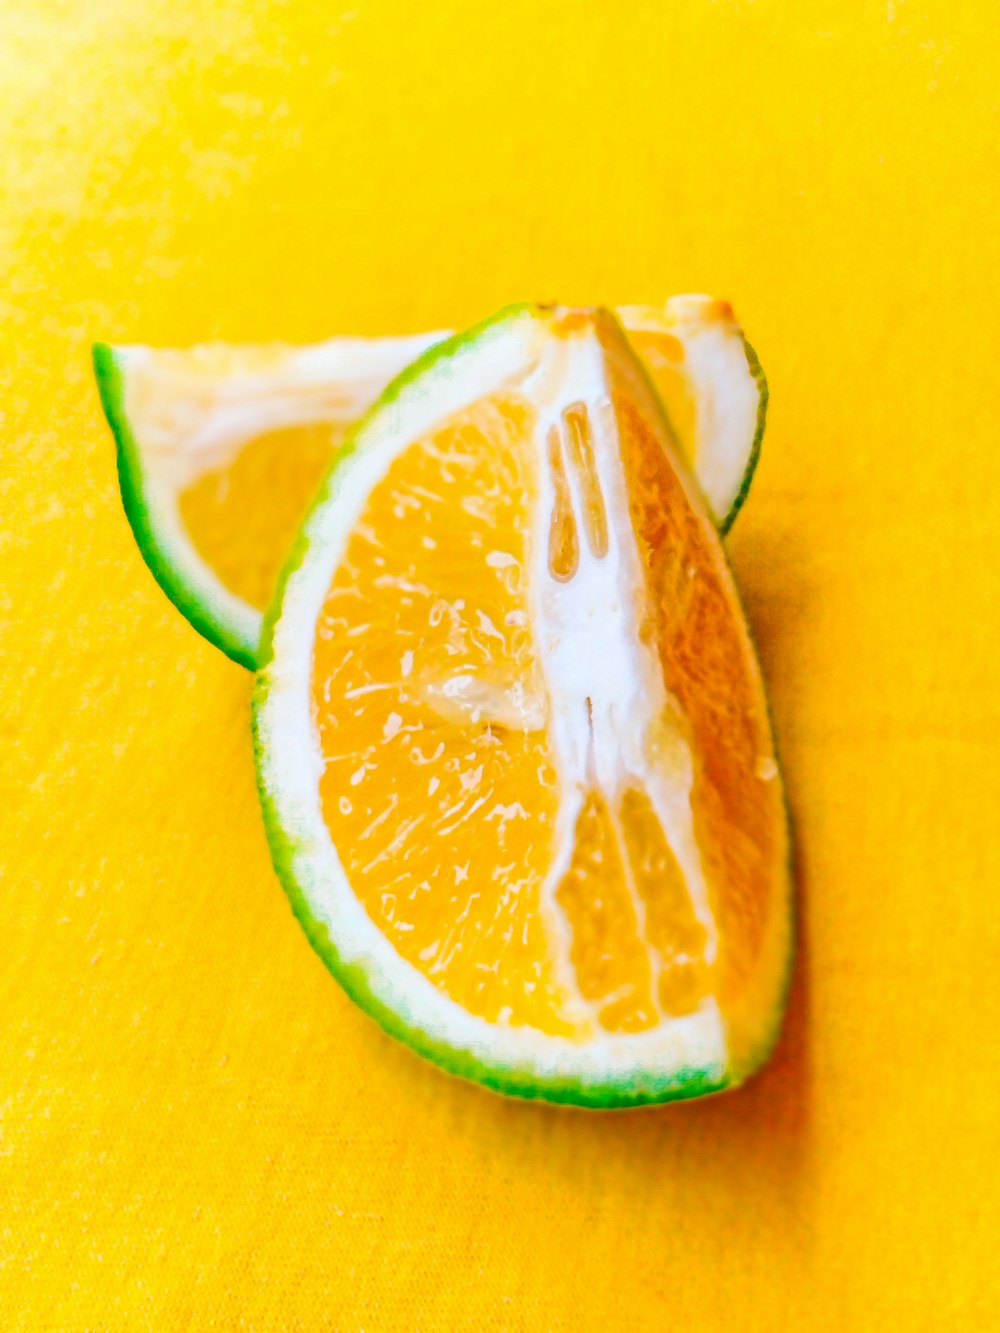 sliced lemon on yellow surface